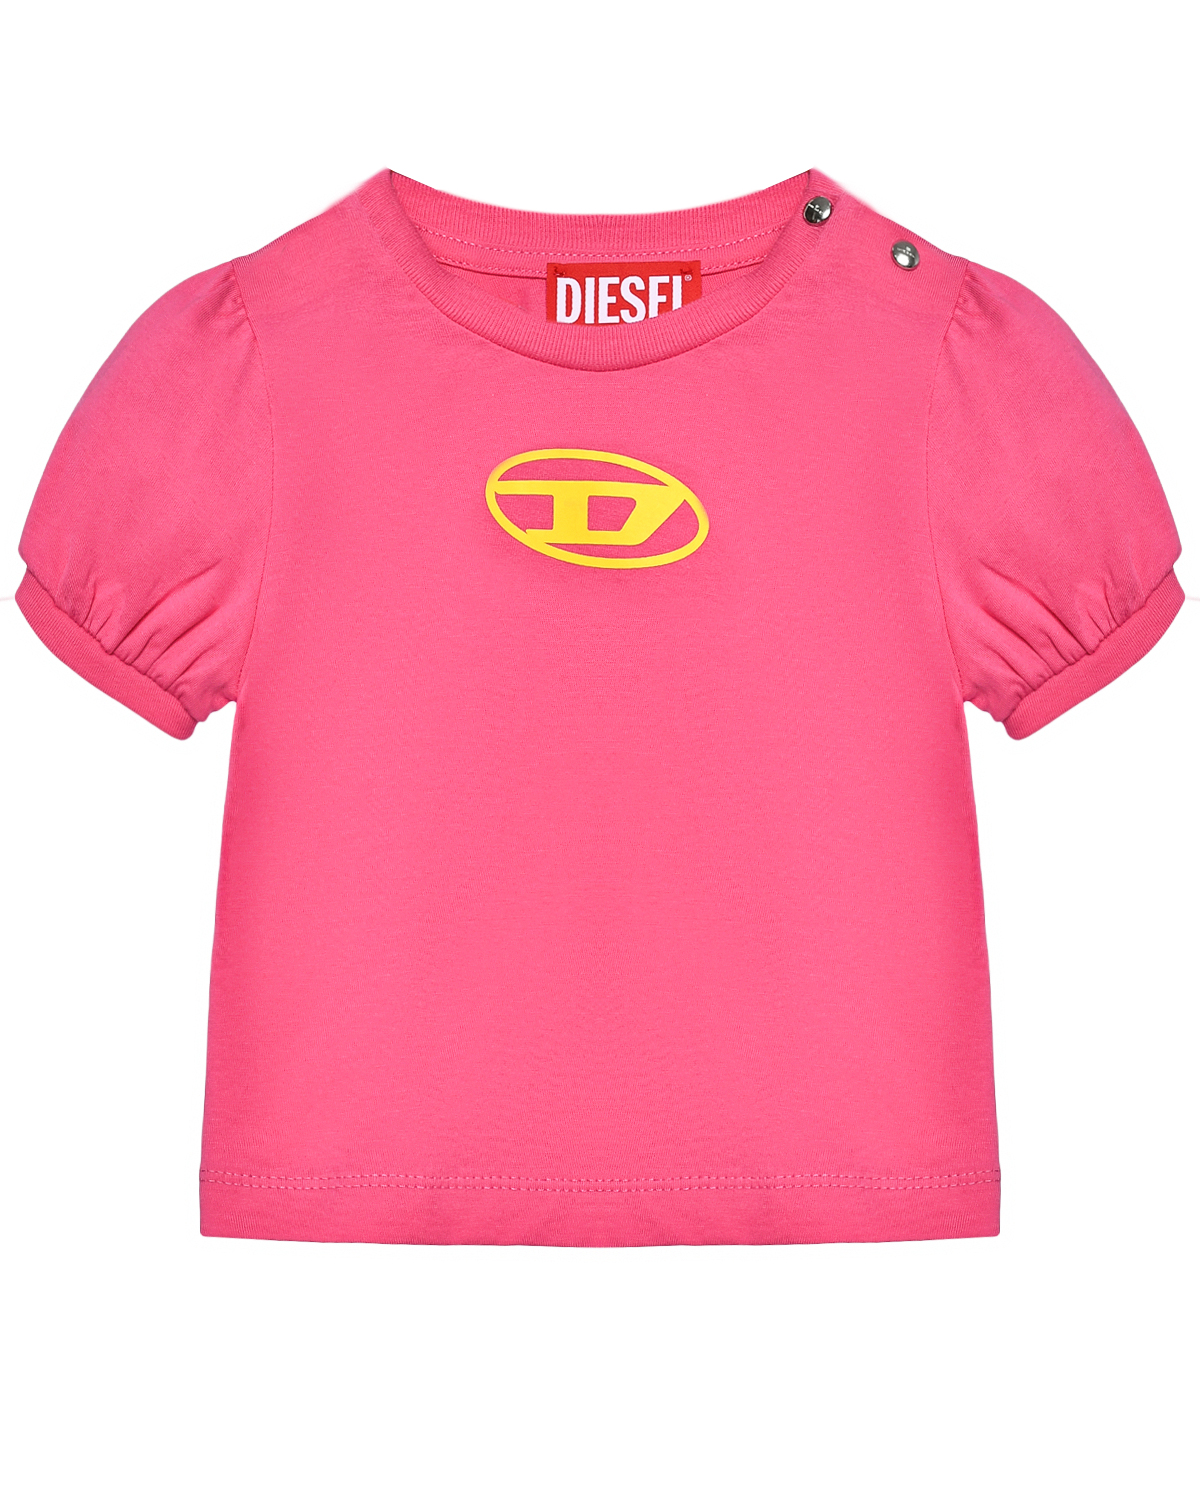 Футболка по середине желтое лого Diesel, размер 98, цвет розовый - фото 1